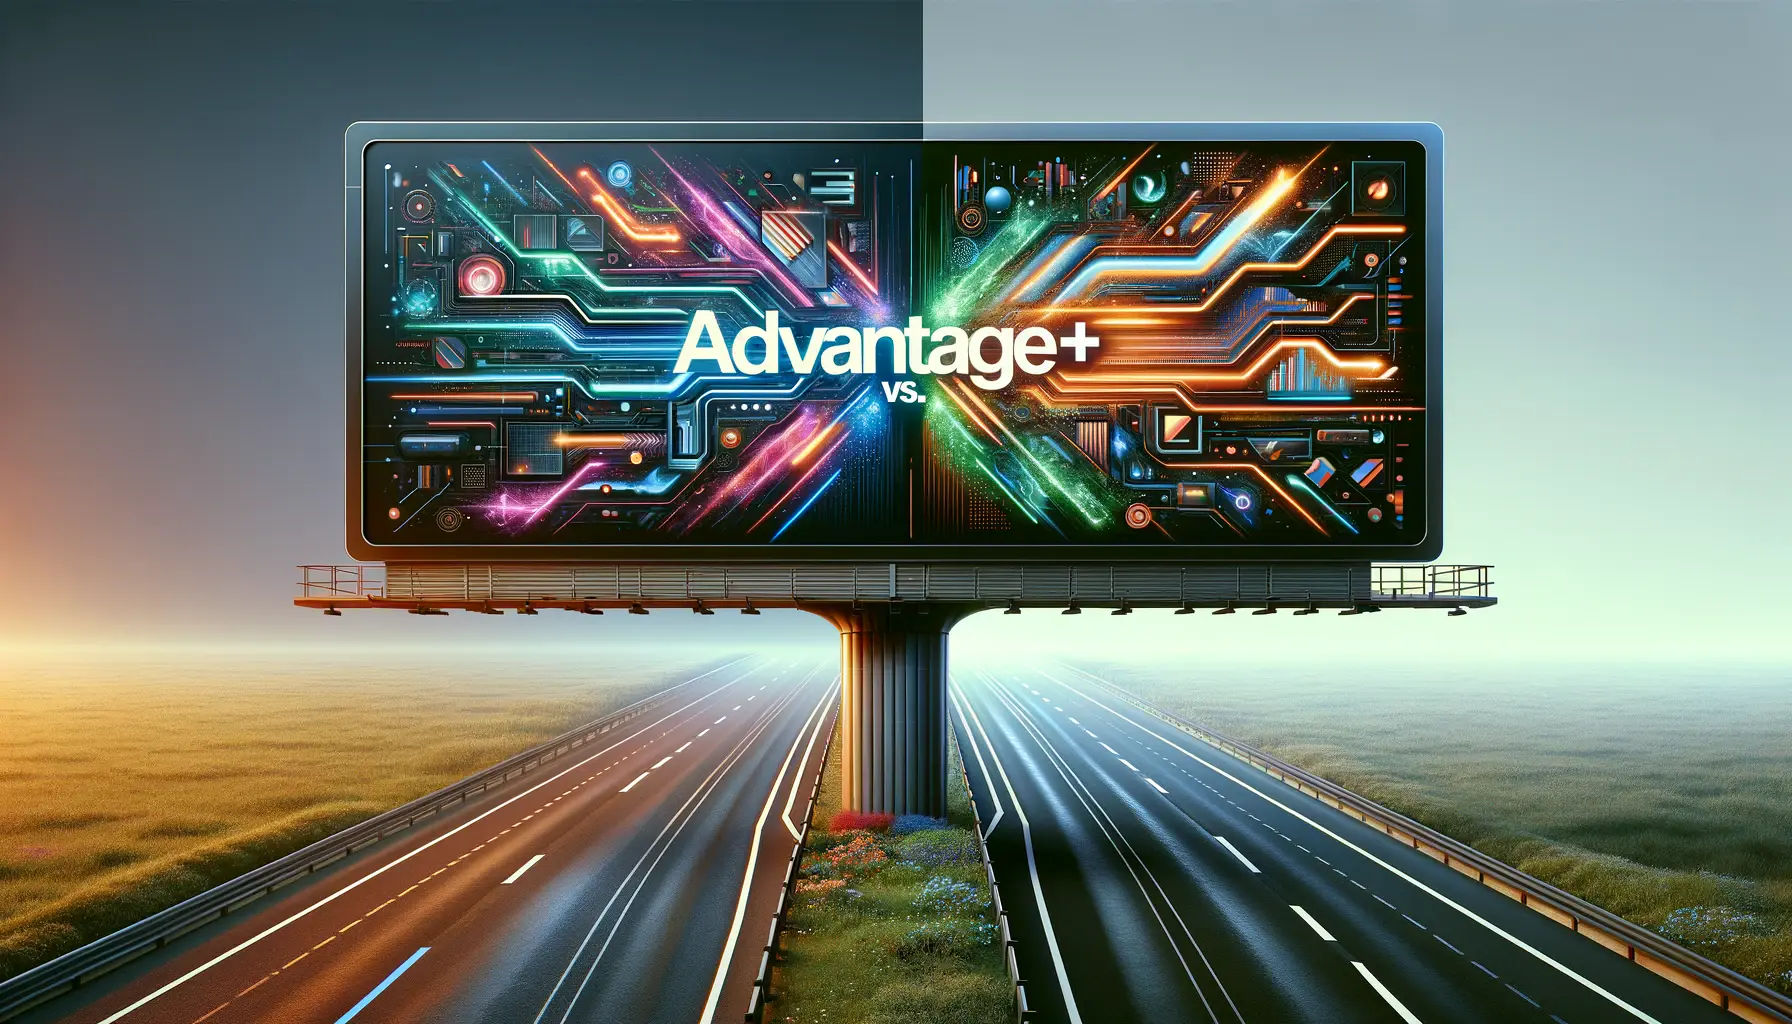 Advantage+ vs. Traditional Ads